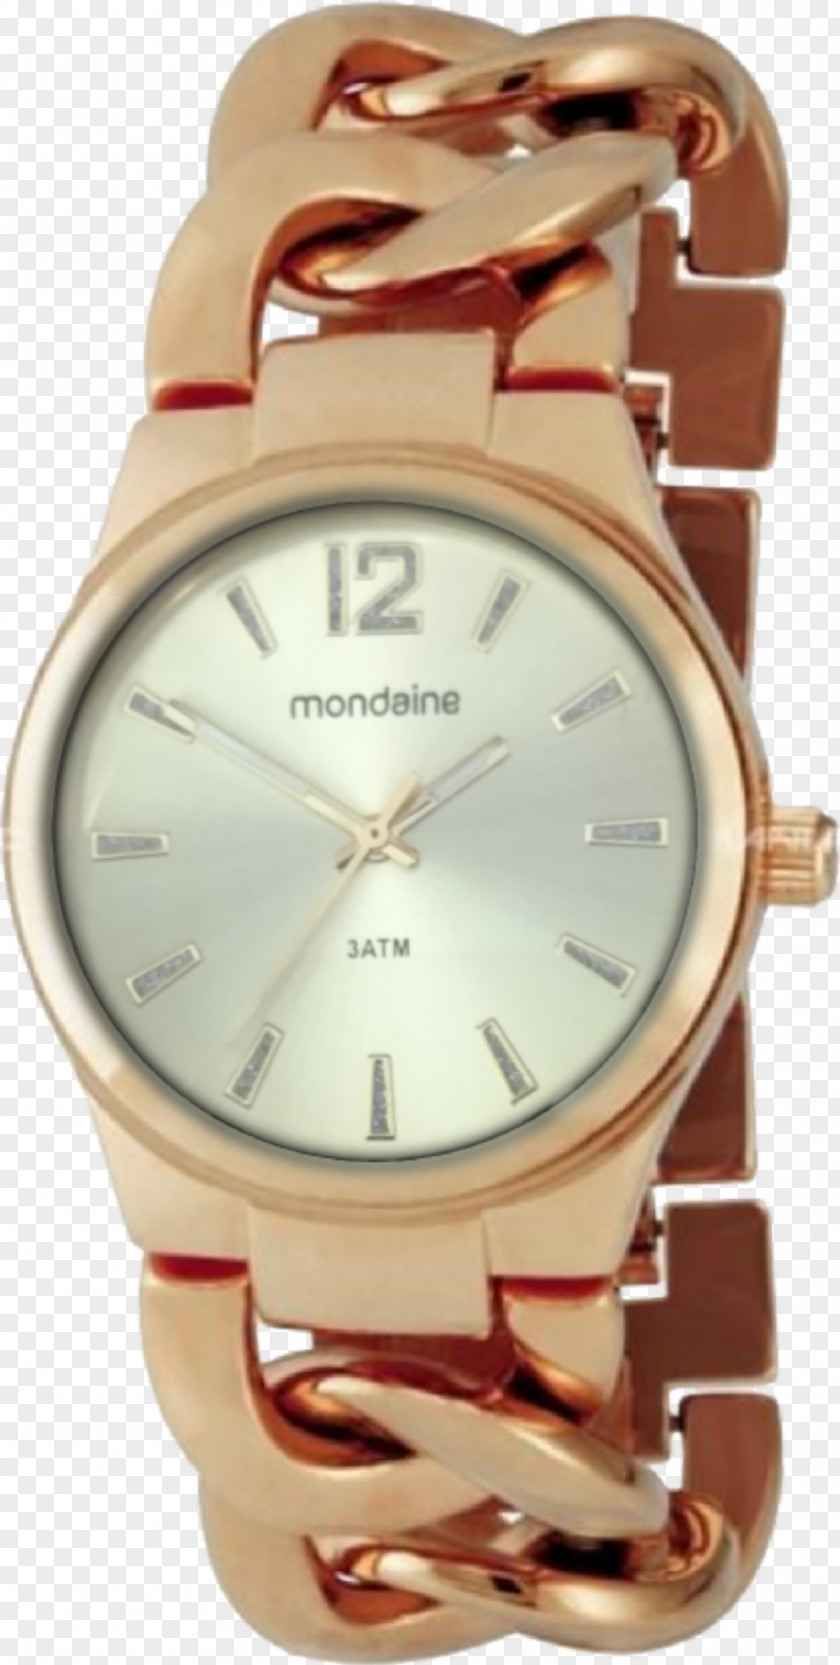 Watch Mondaine Ltd. Clock Strap PNG